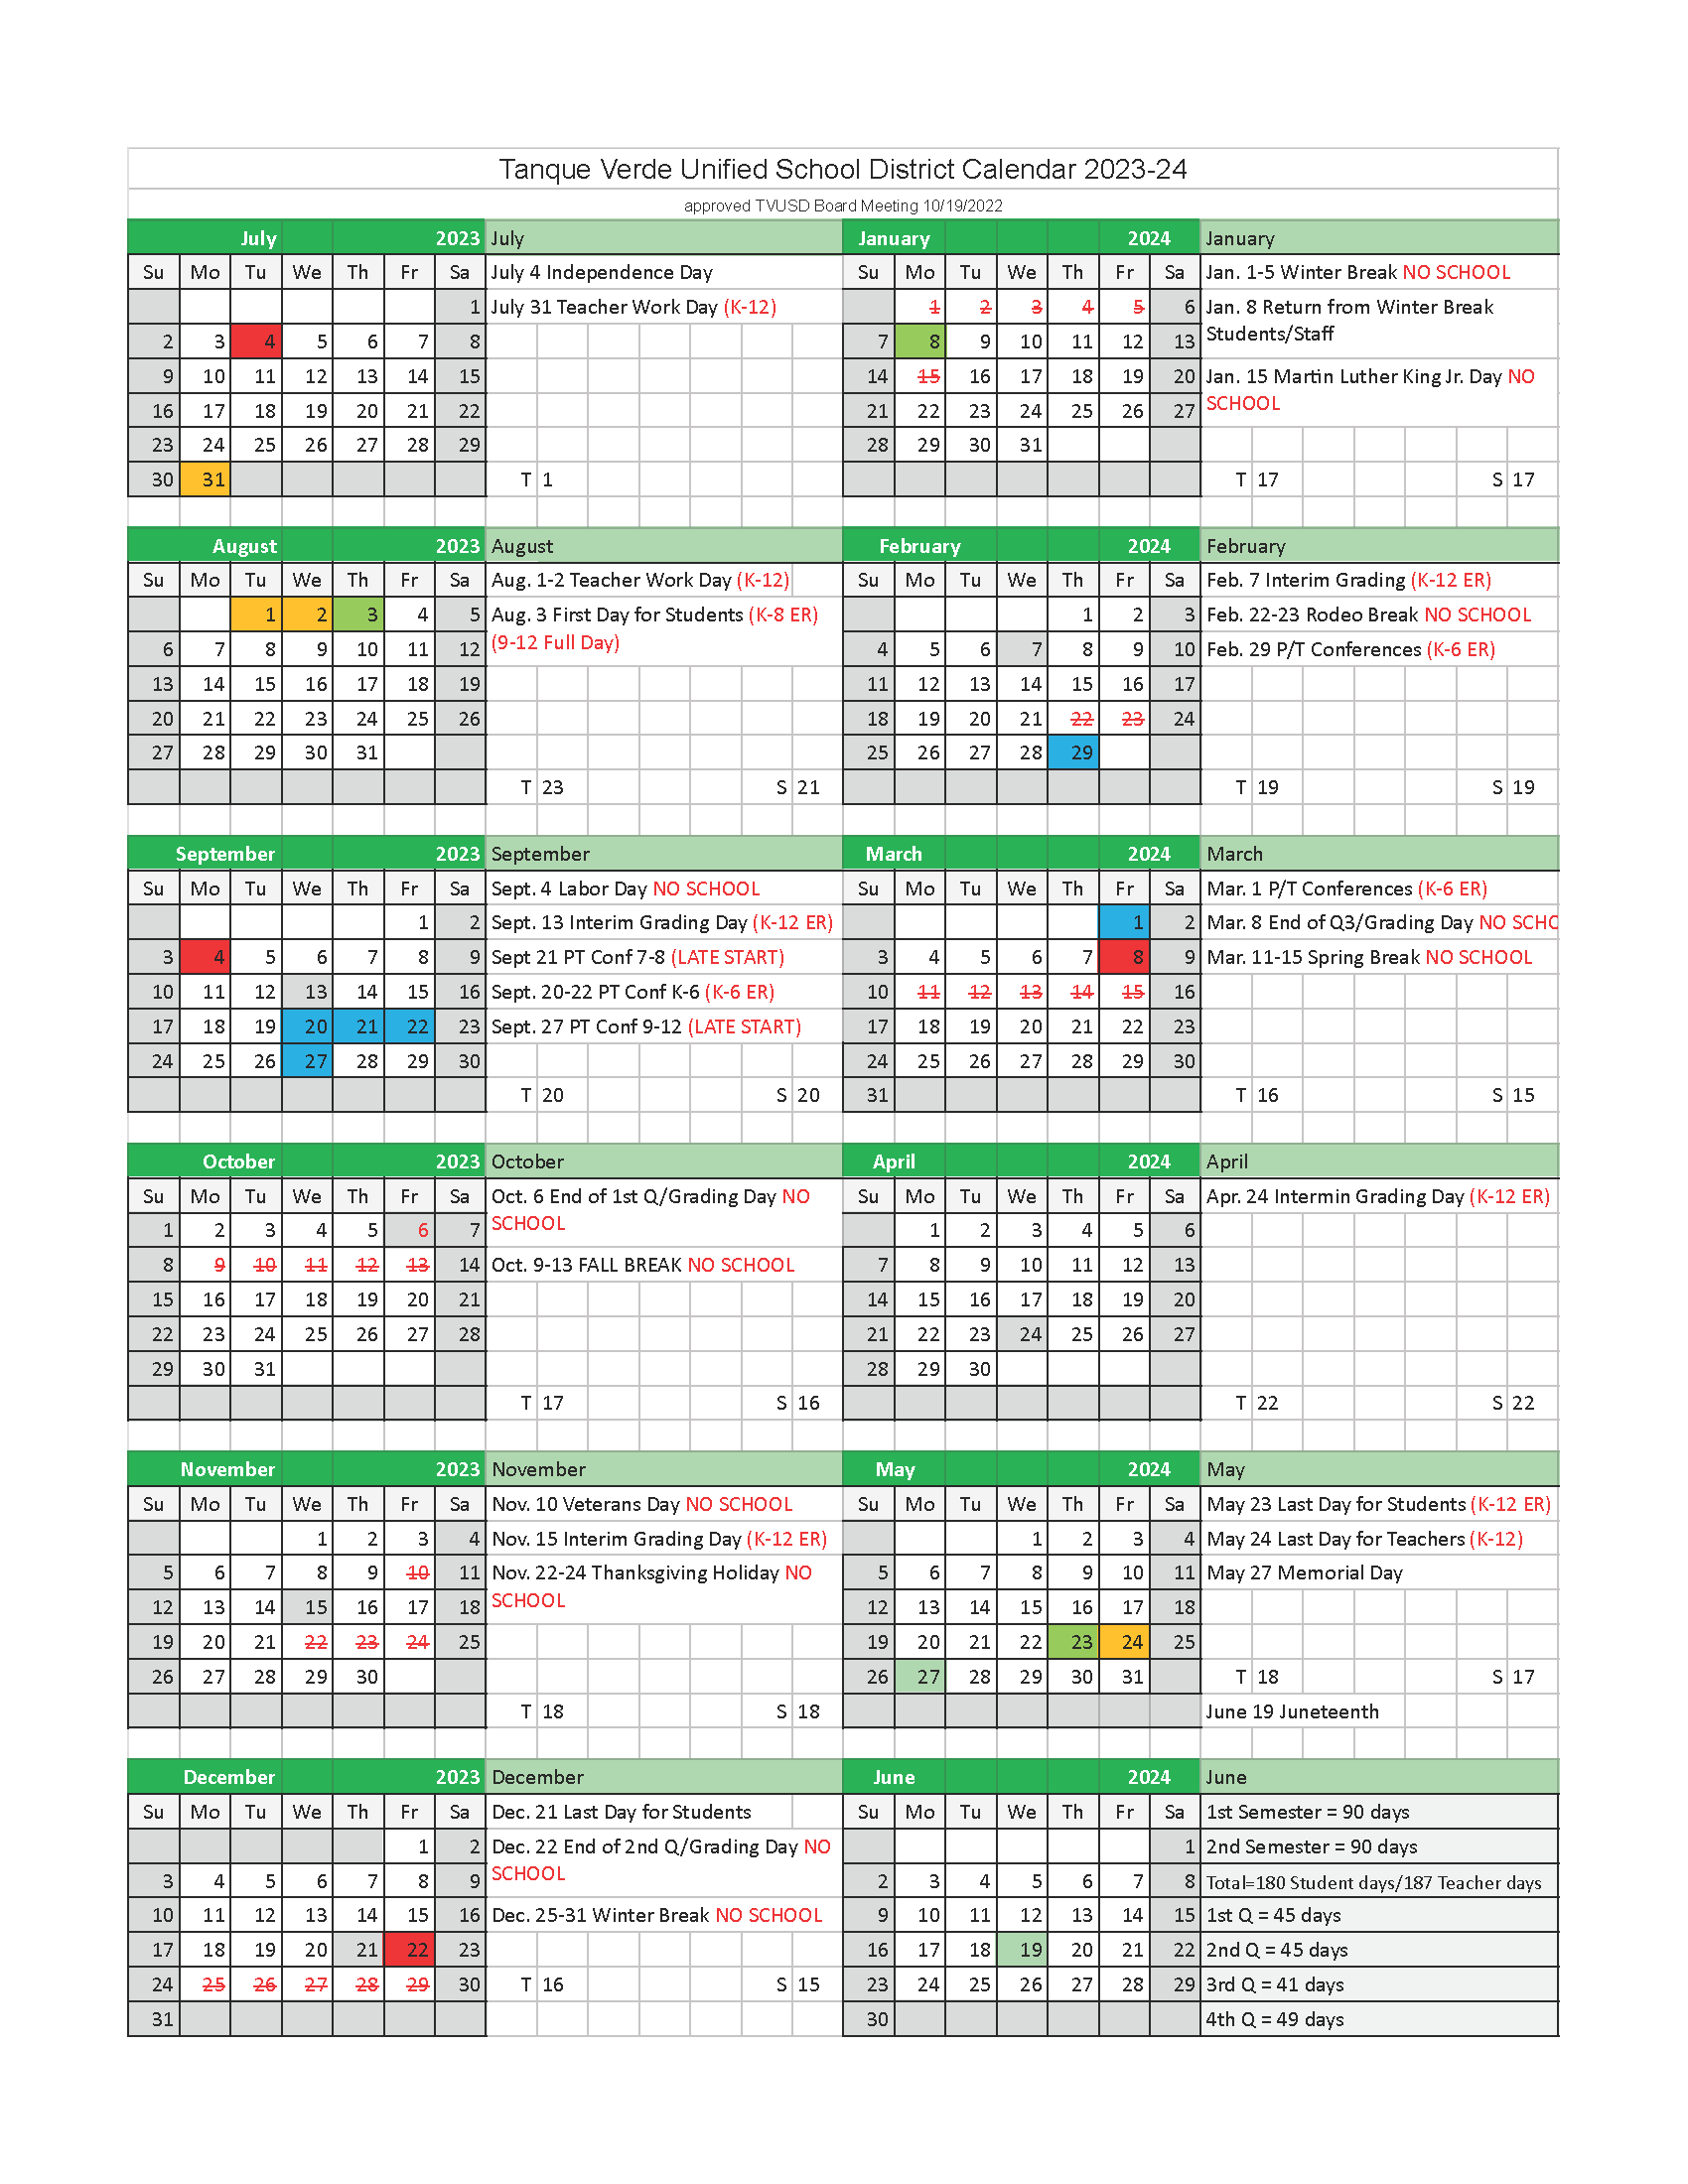 2023-24 TVUSD School Year Calendar